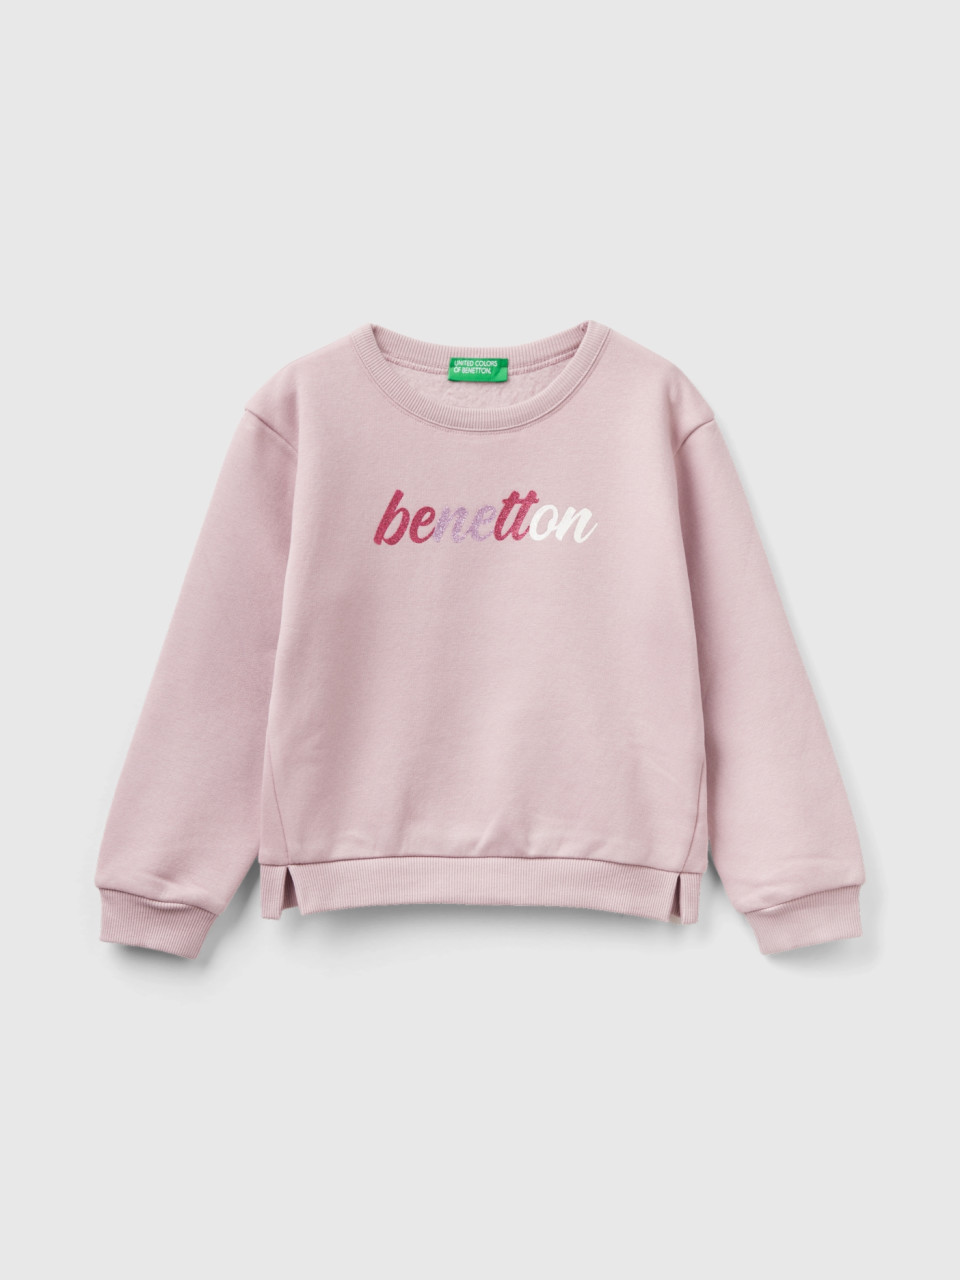 Benetton, Pullover Sweatshirt With Glittery Print, Pink, Kids